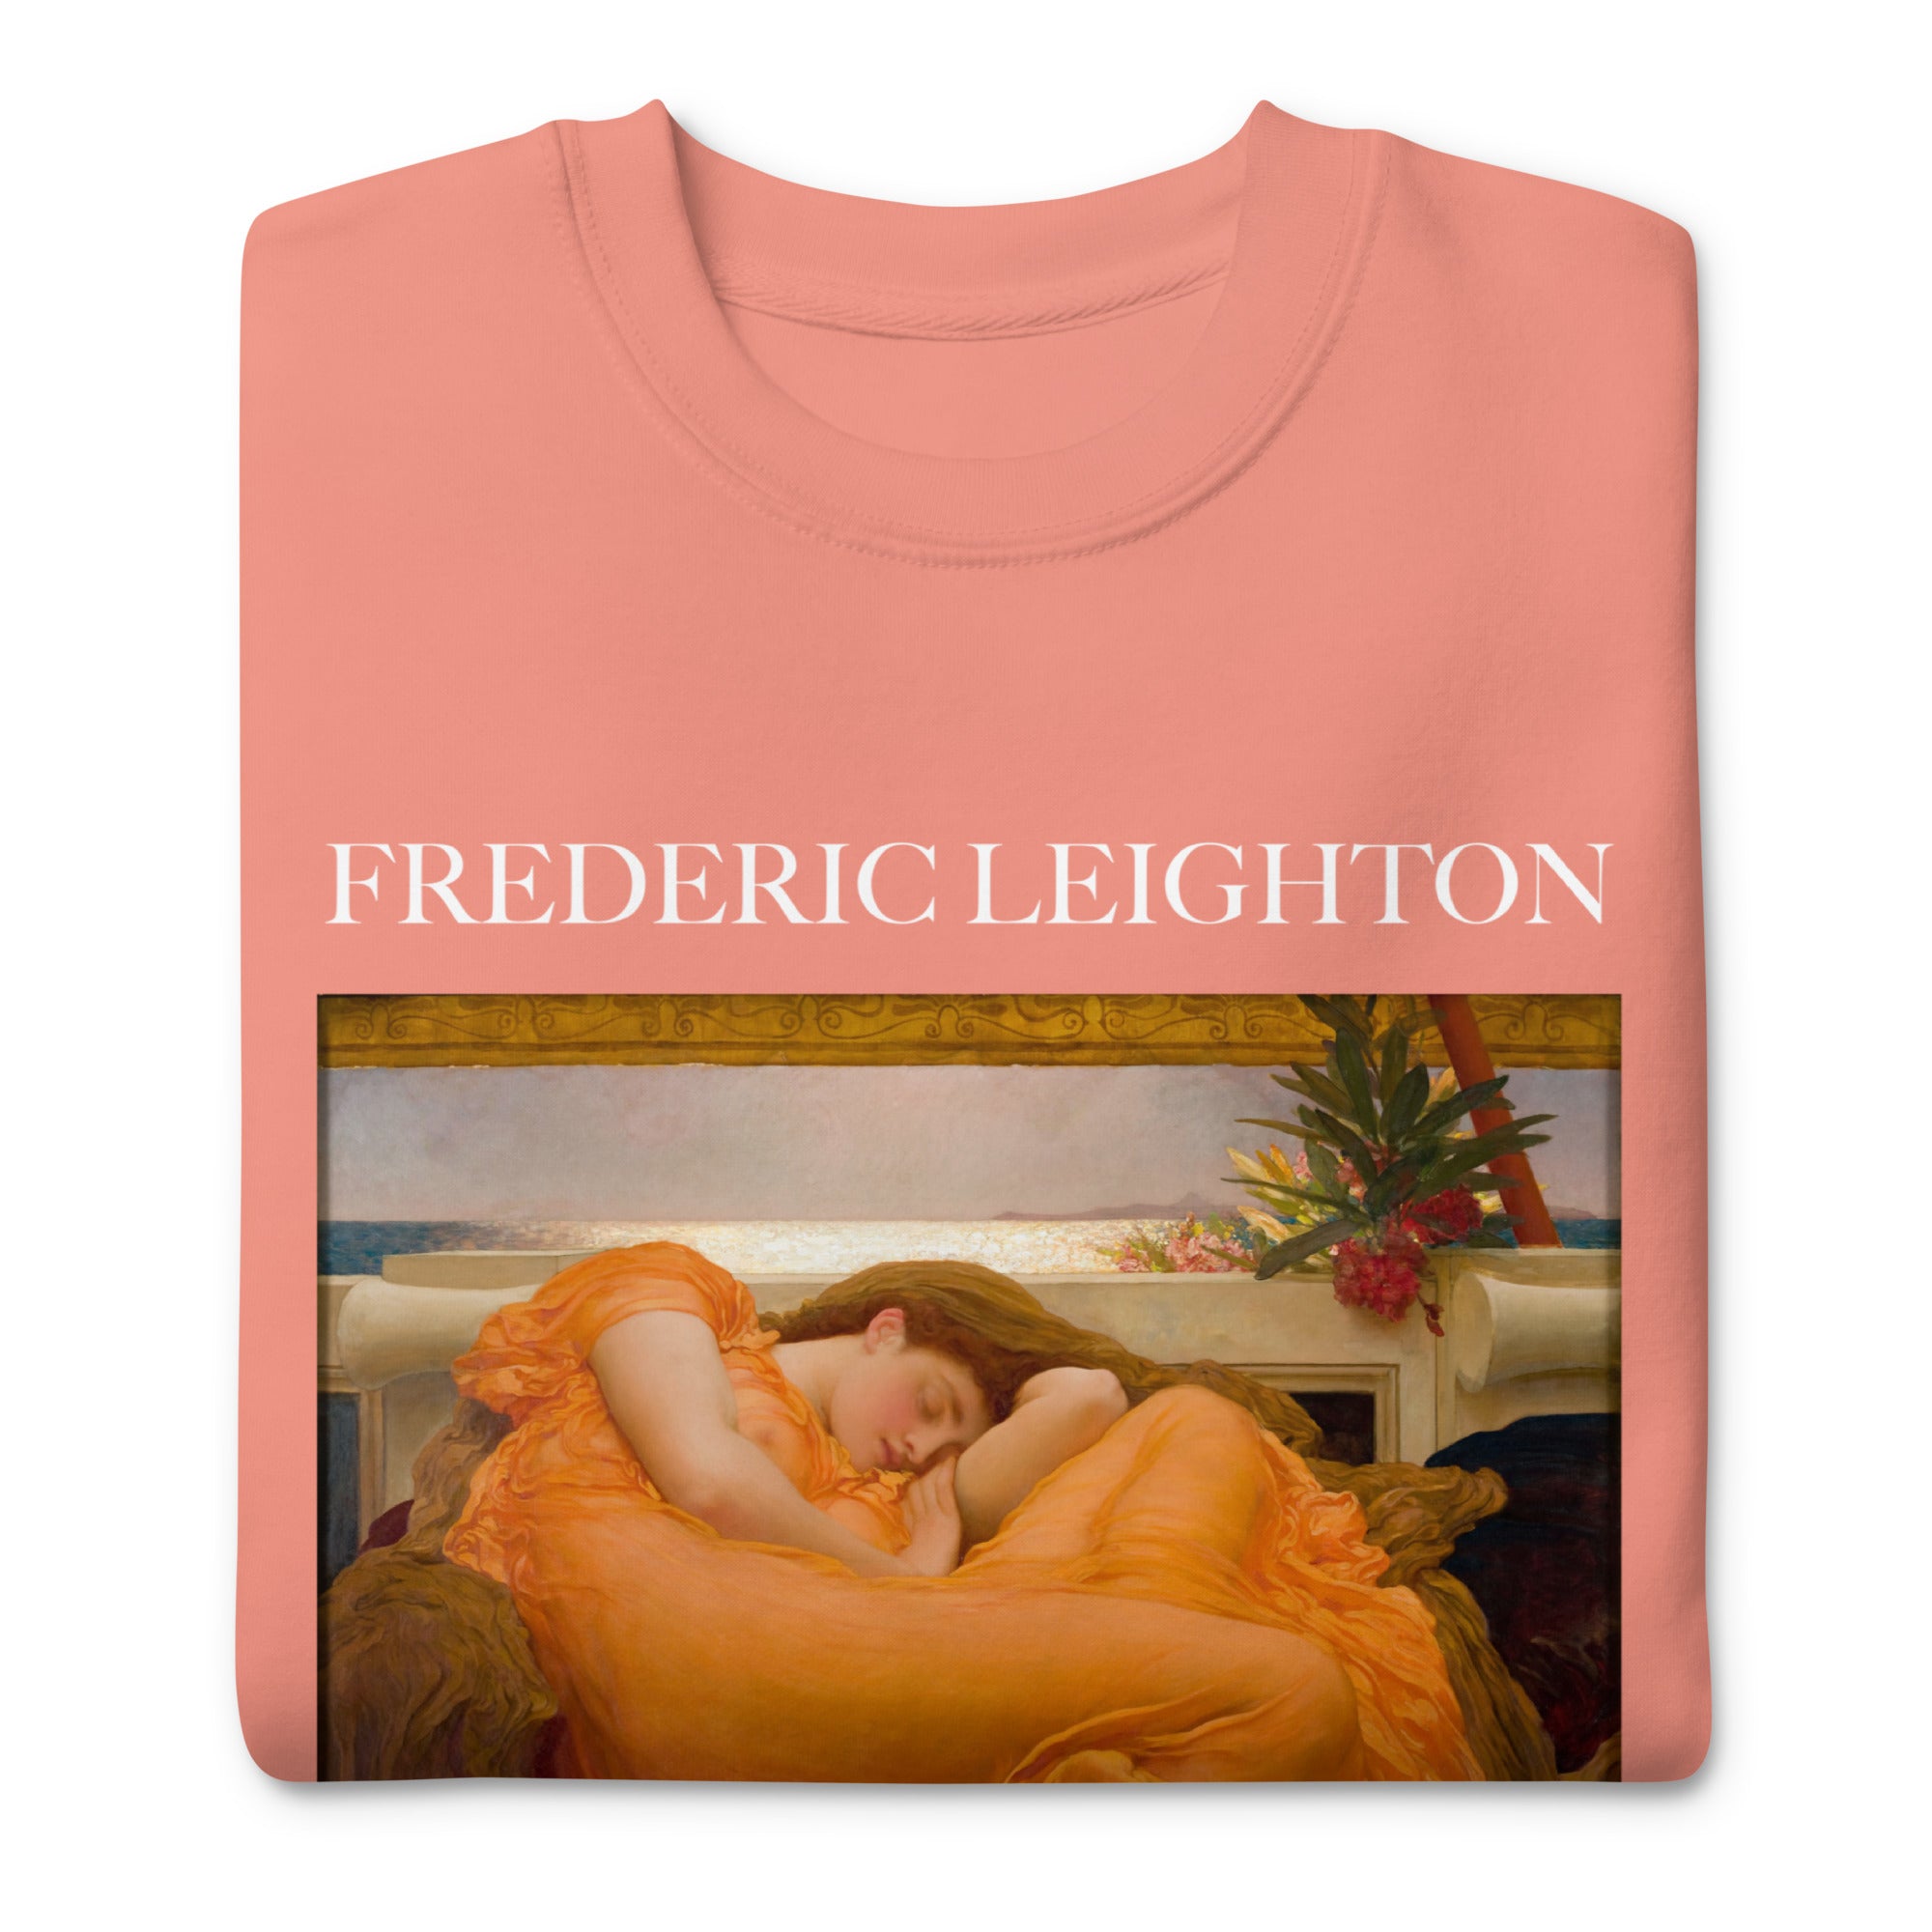 Frederic Leighton 'Flaming June' Famous Painting Sweatshirt | Unisex Premium Sweatshirt